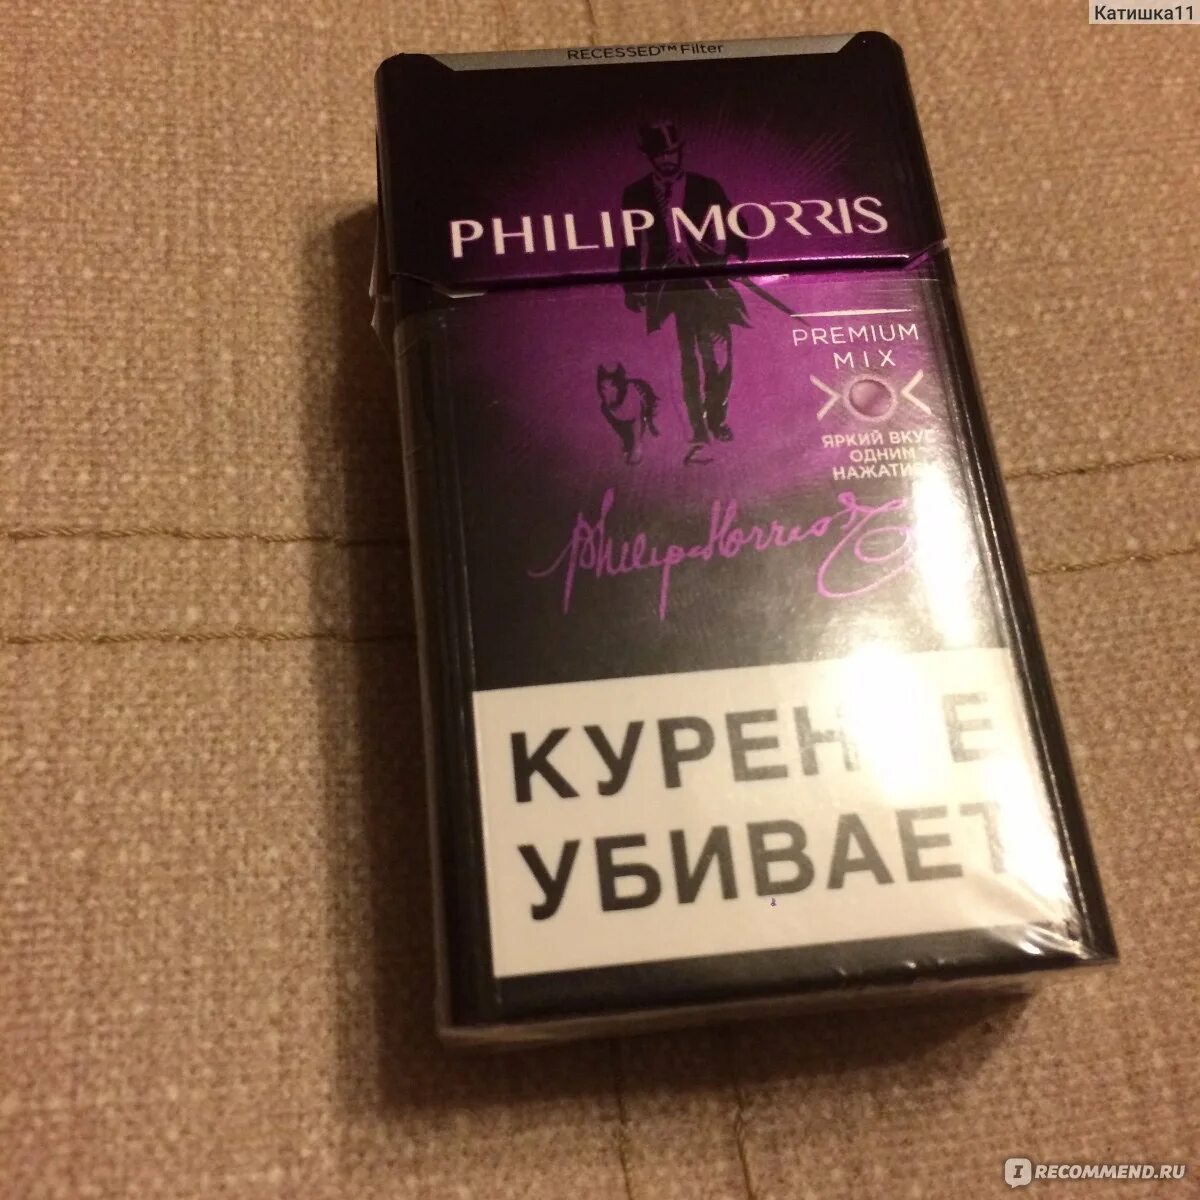 Сигареты Филип Моррис с кнопкой. Сигареты Филип Моррис с кнопкой фиолетовой. Сигареты Philip Morris с фиолетовой кнопкой.